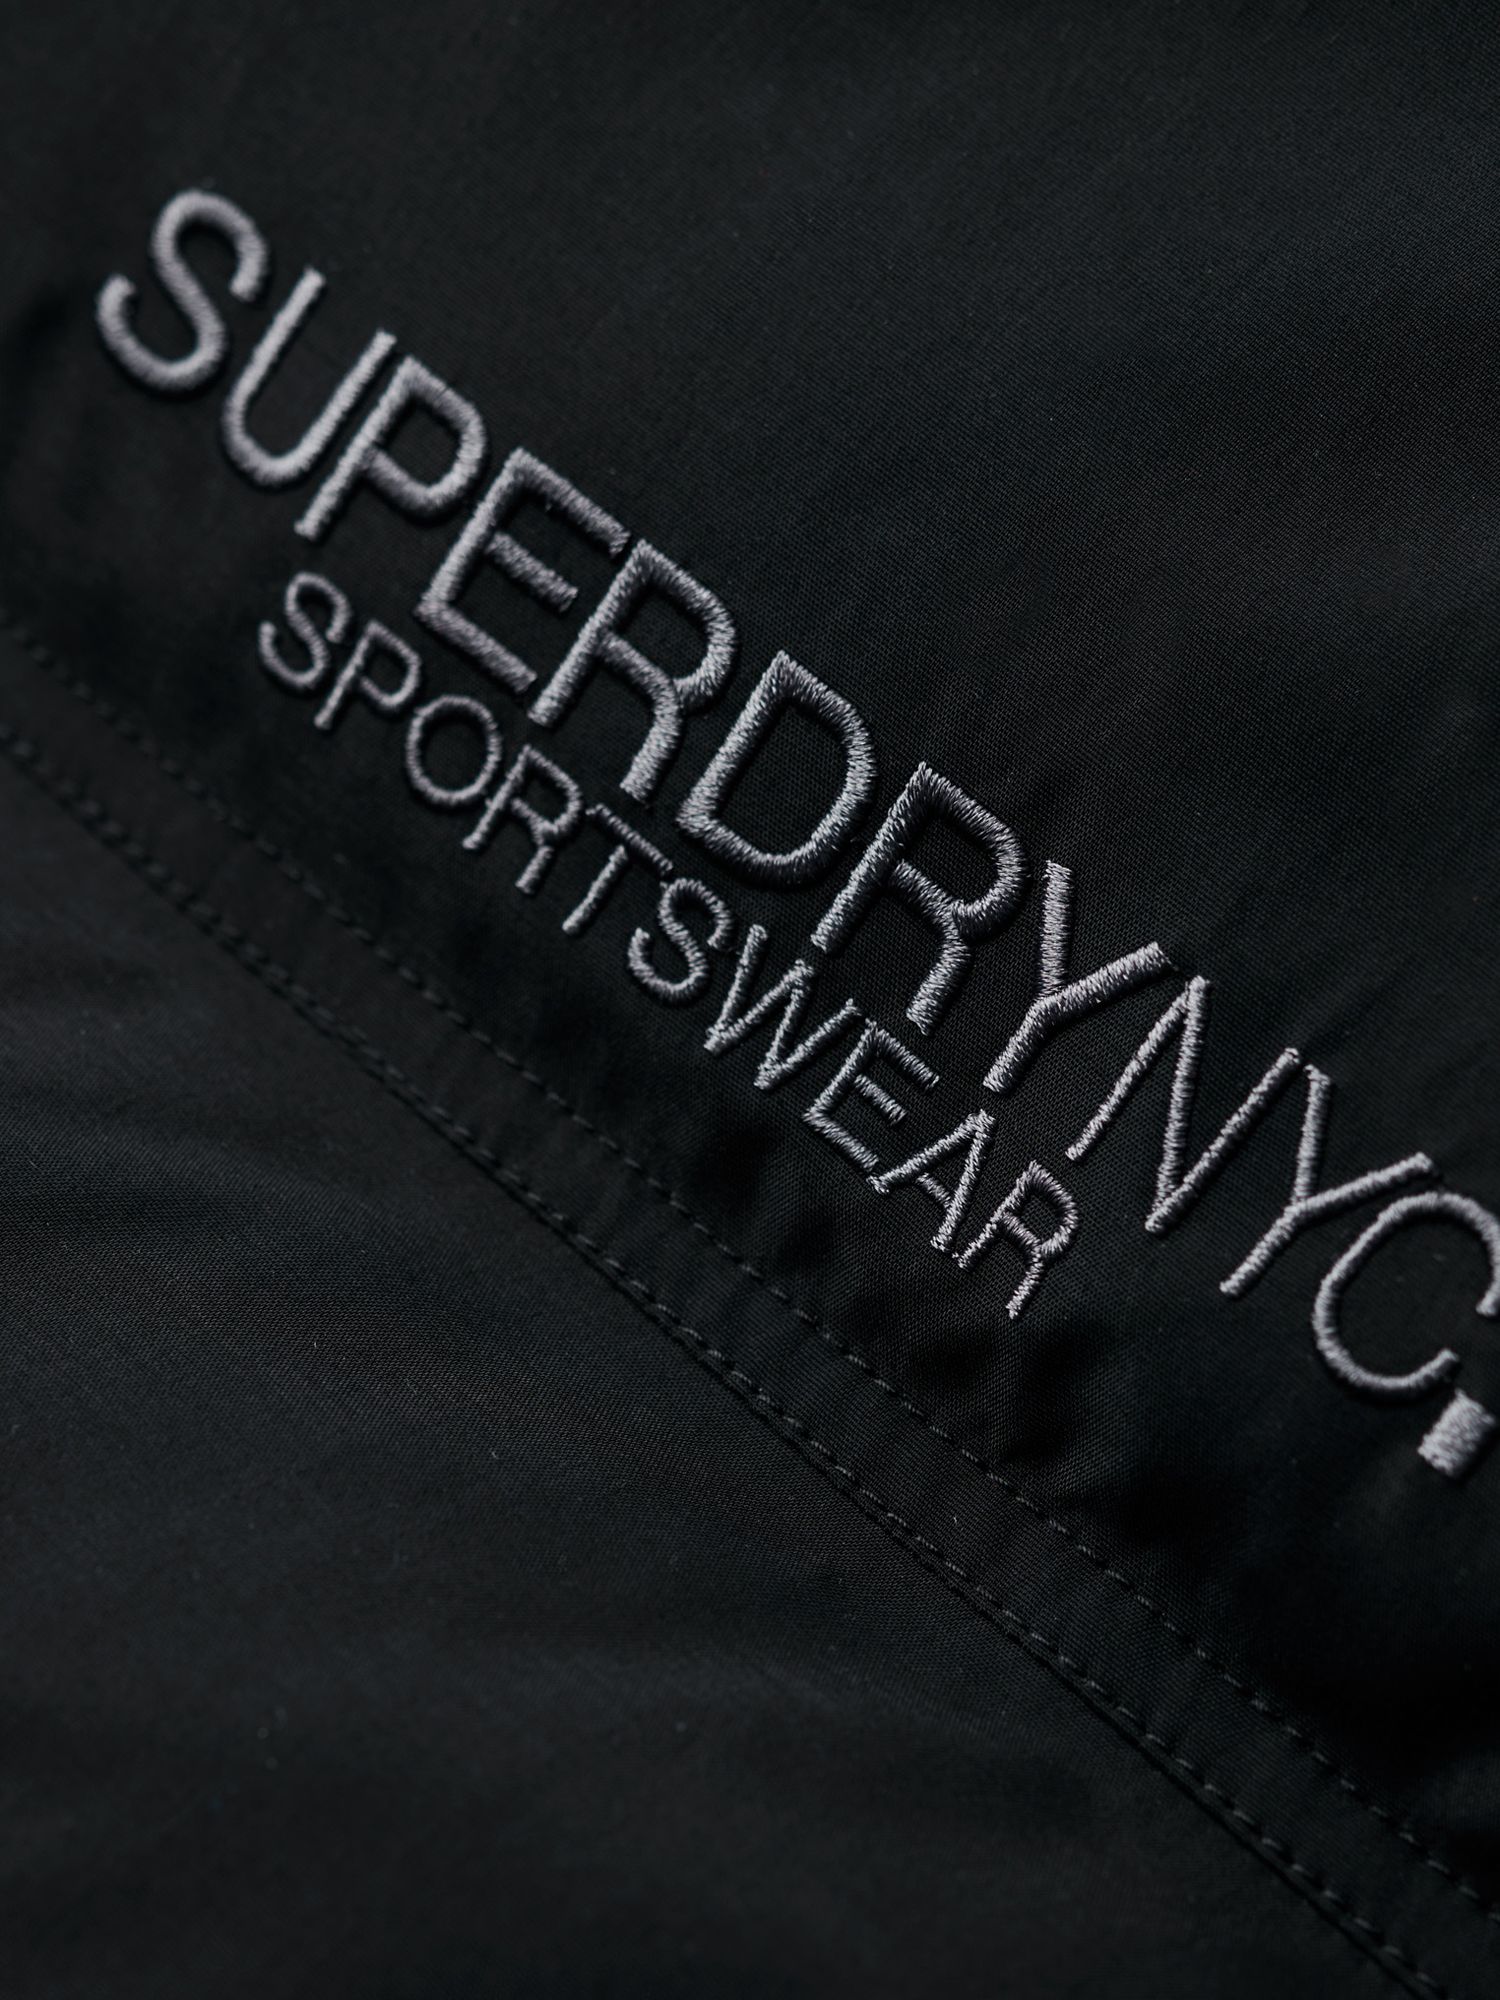 Superdry City Chevron Padded Parka Coat, Black, S